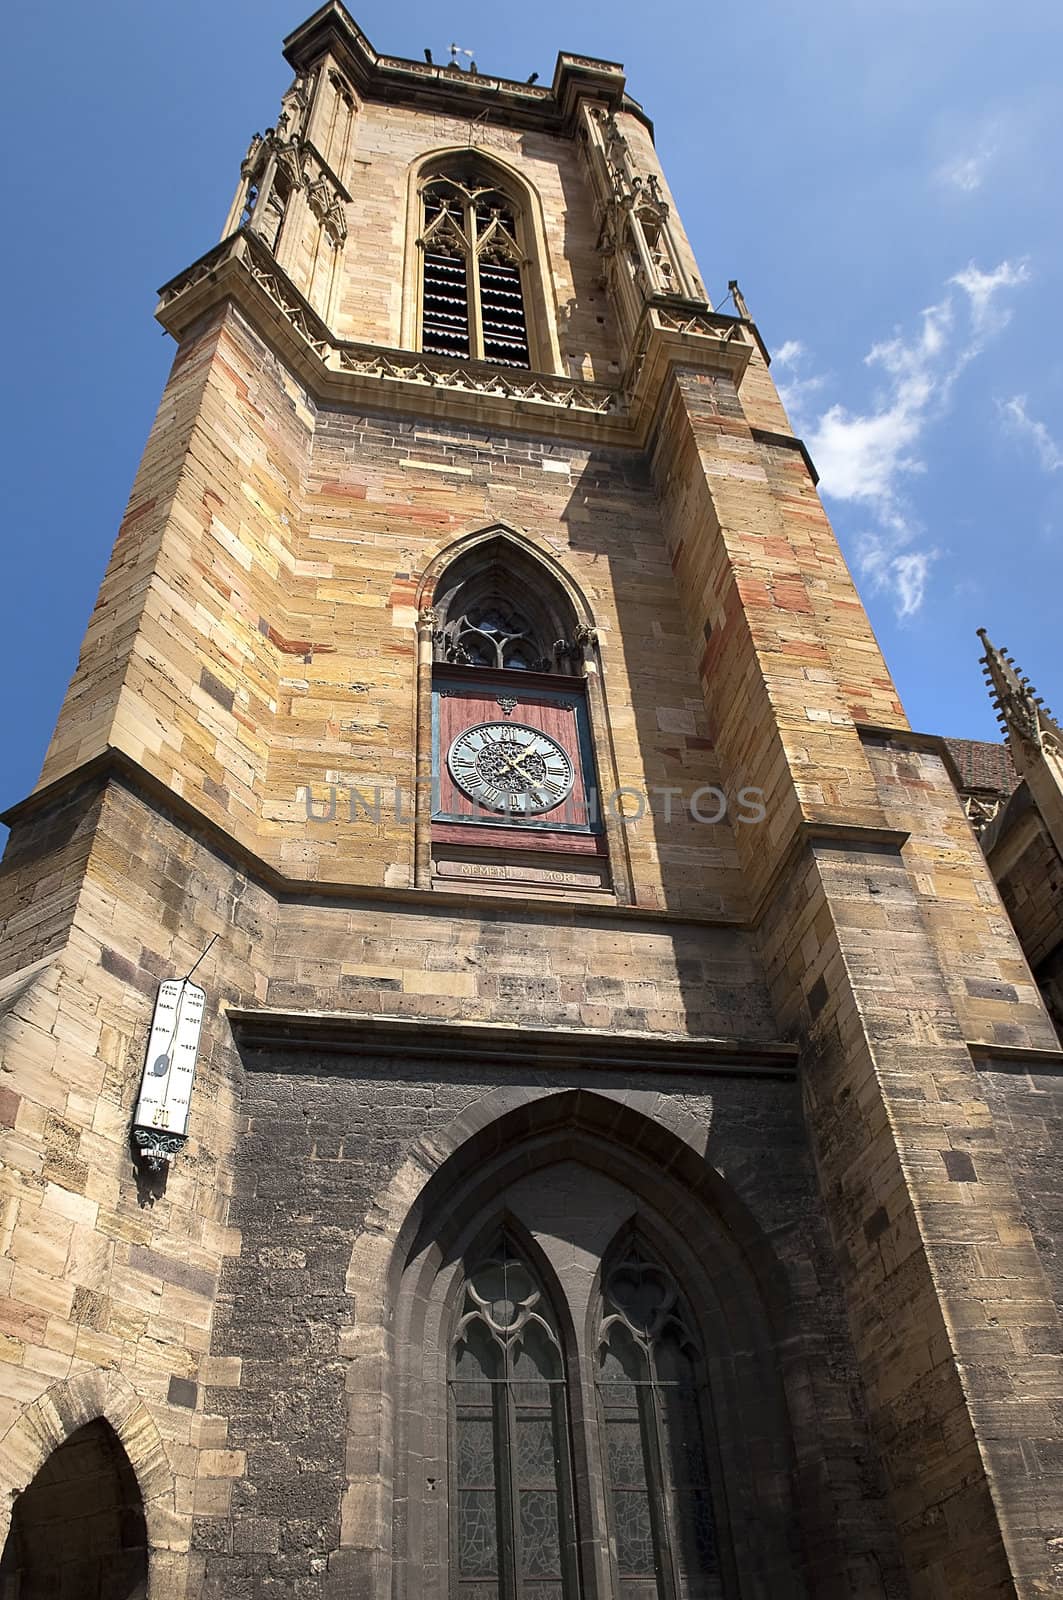 City clock tower in Colmar,France by irisphoto4